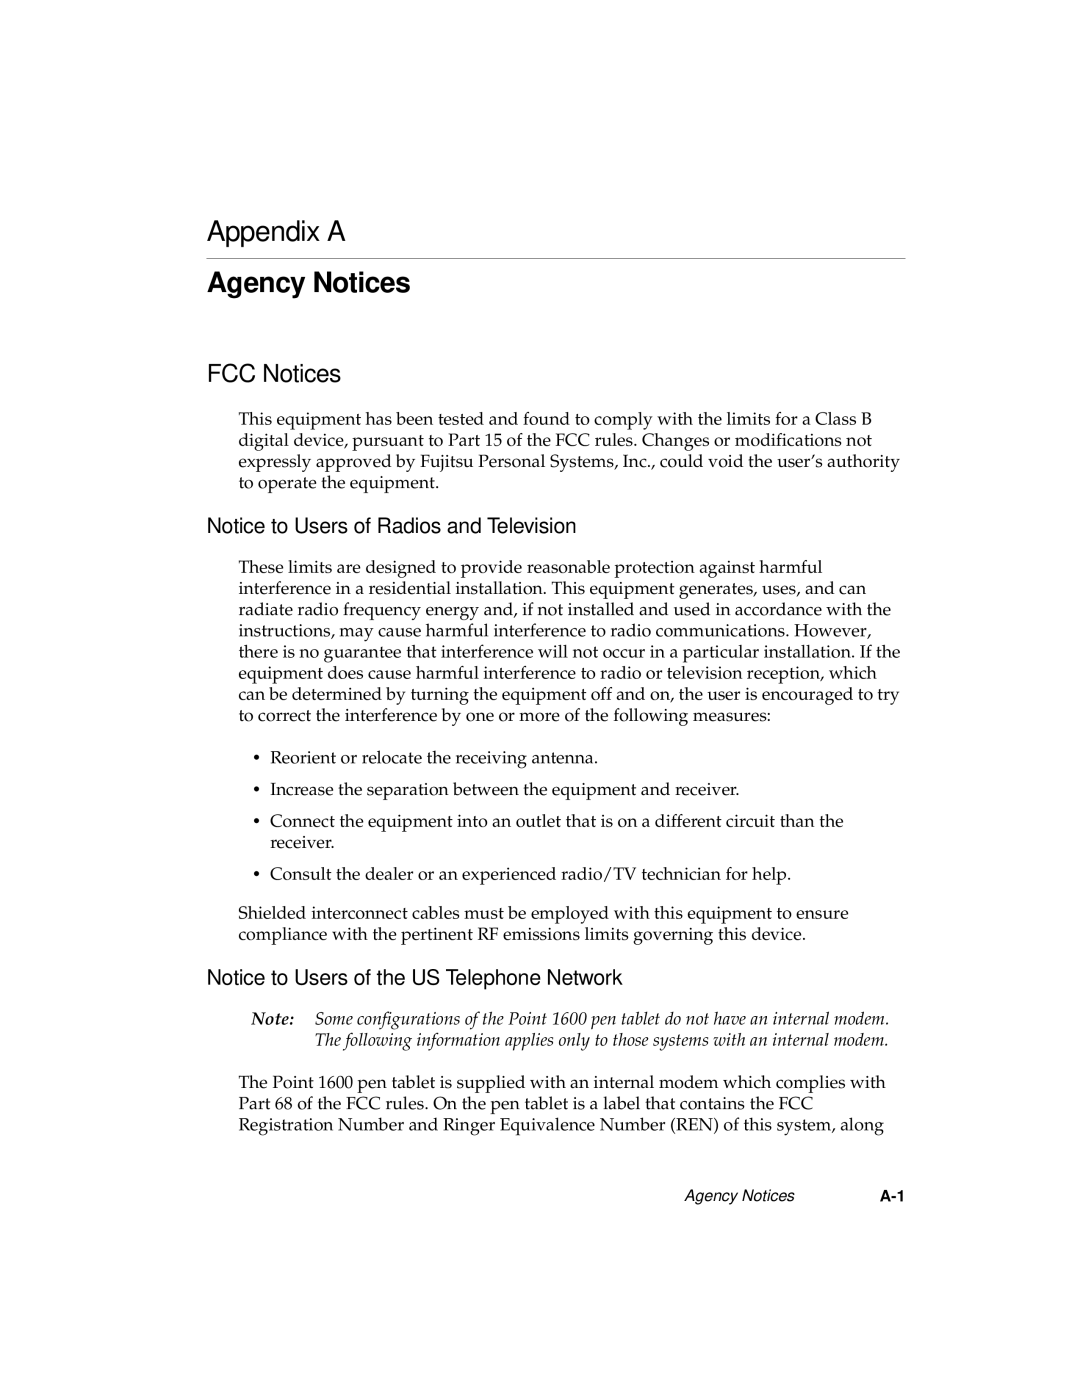 Fujitsu 1600 manual Appendix A, Agency Notices, Notice to Users of Radios and Television, FCC Notices 